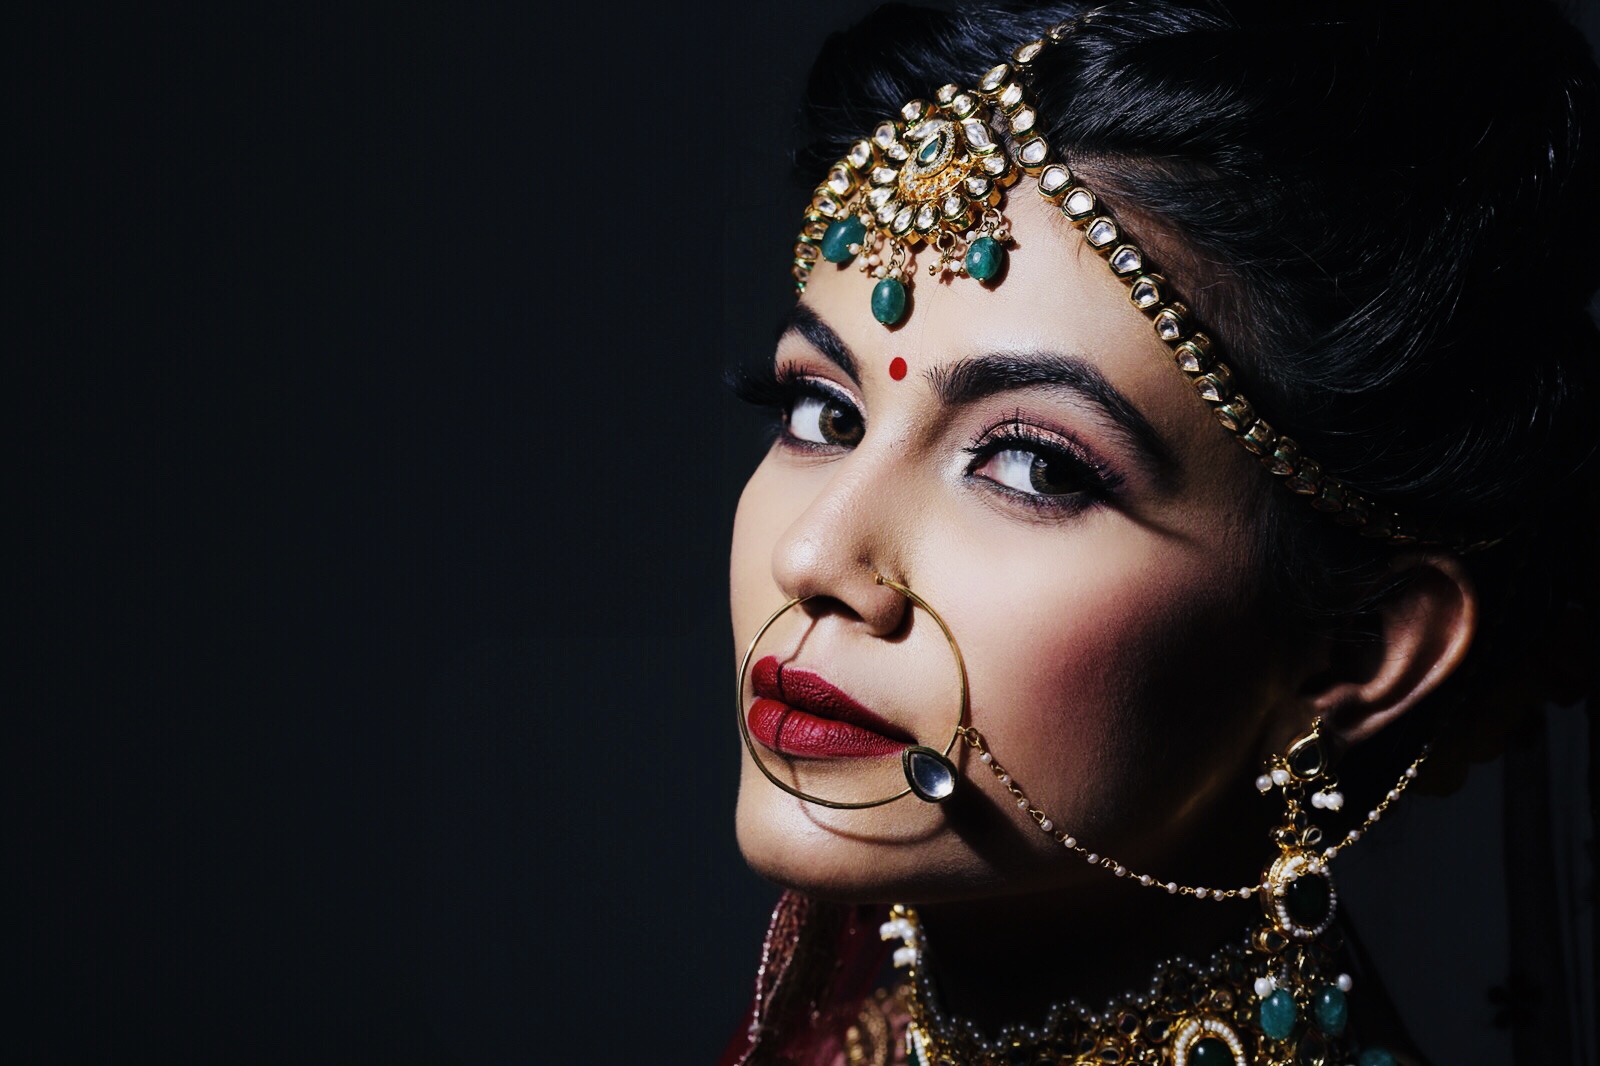 makeup-artist-prachi-bhagra-makeup-artist-delhi-ncr